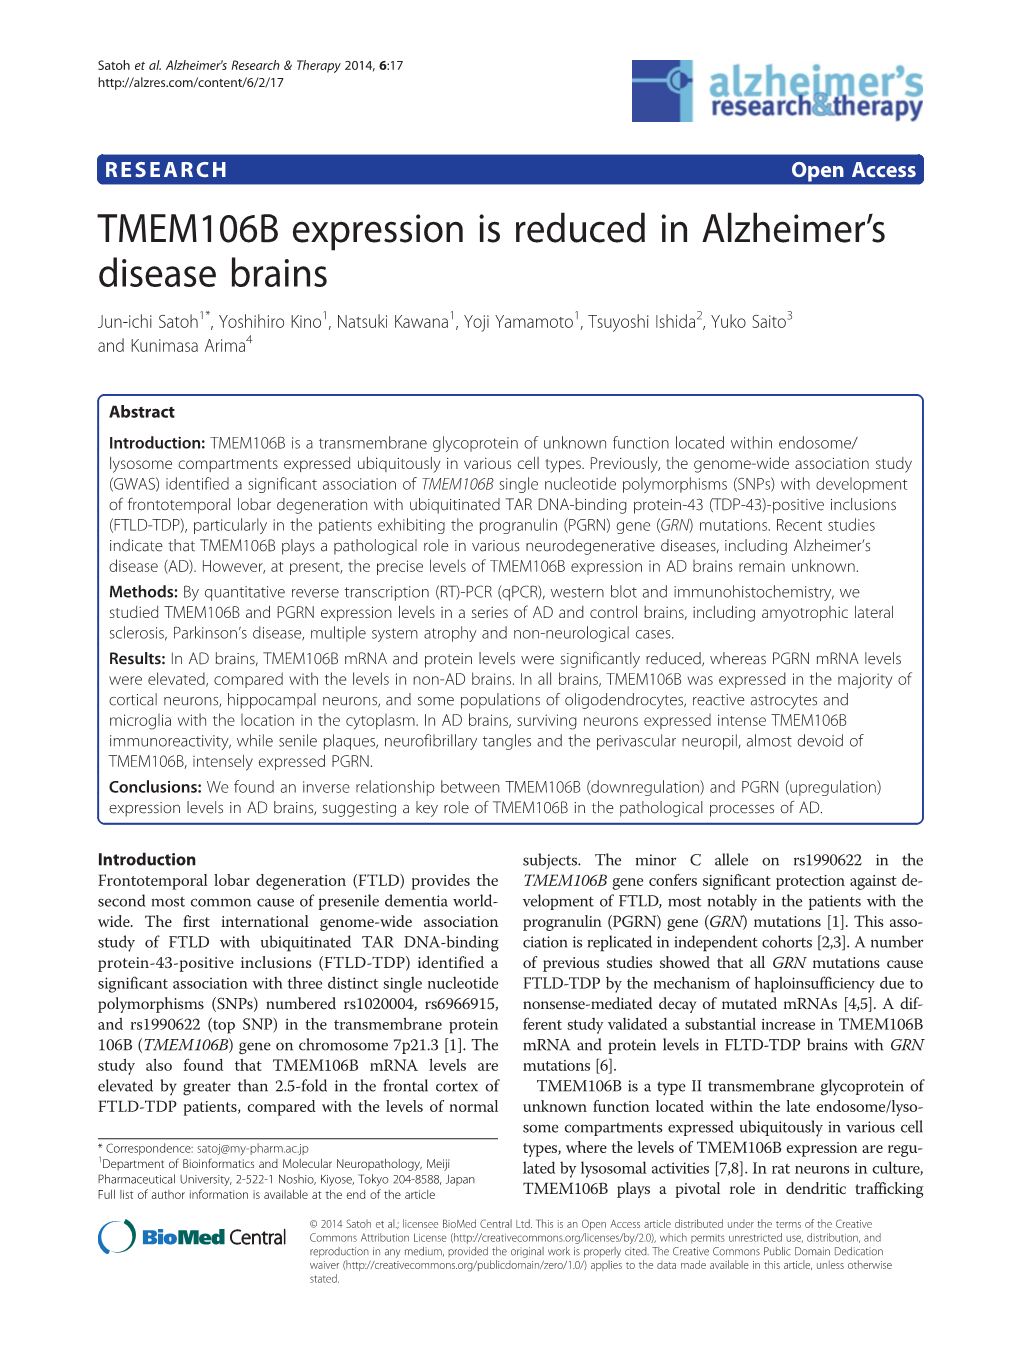 TMEM106B Expression Is Reduced in Alzheimer's Disease Brains